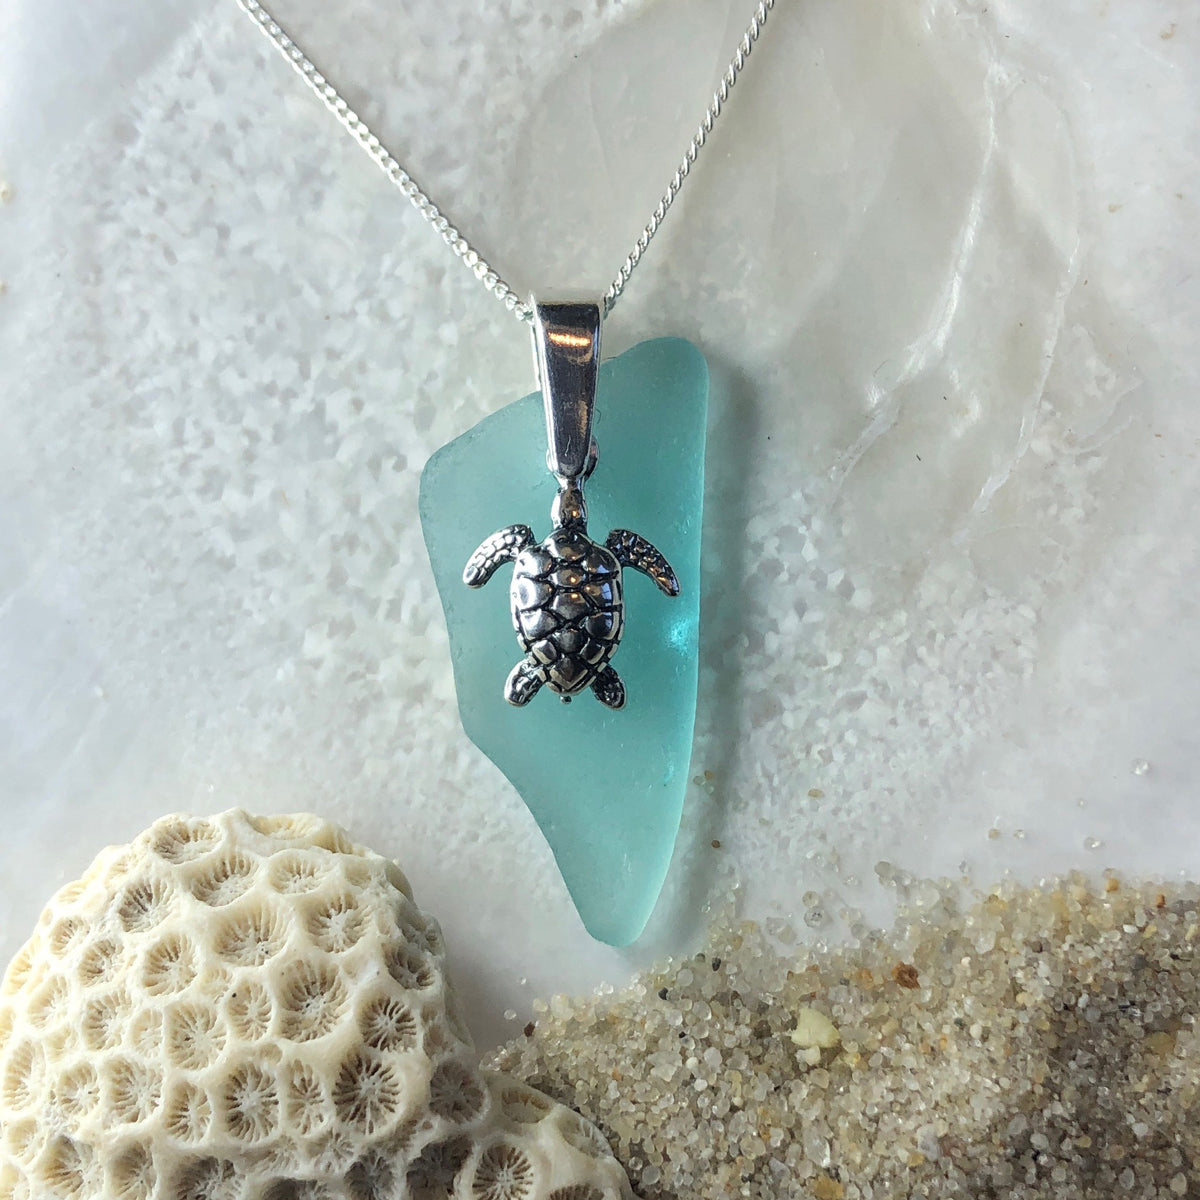 Aqua Sea Glass Necklace with Turtle Pendant